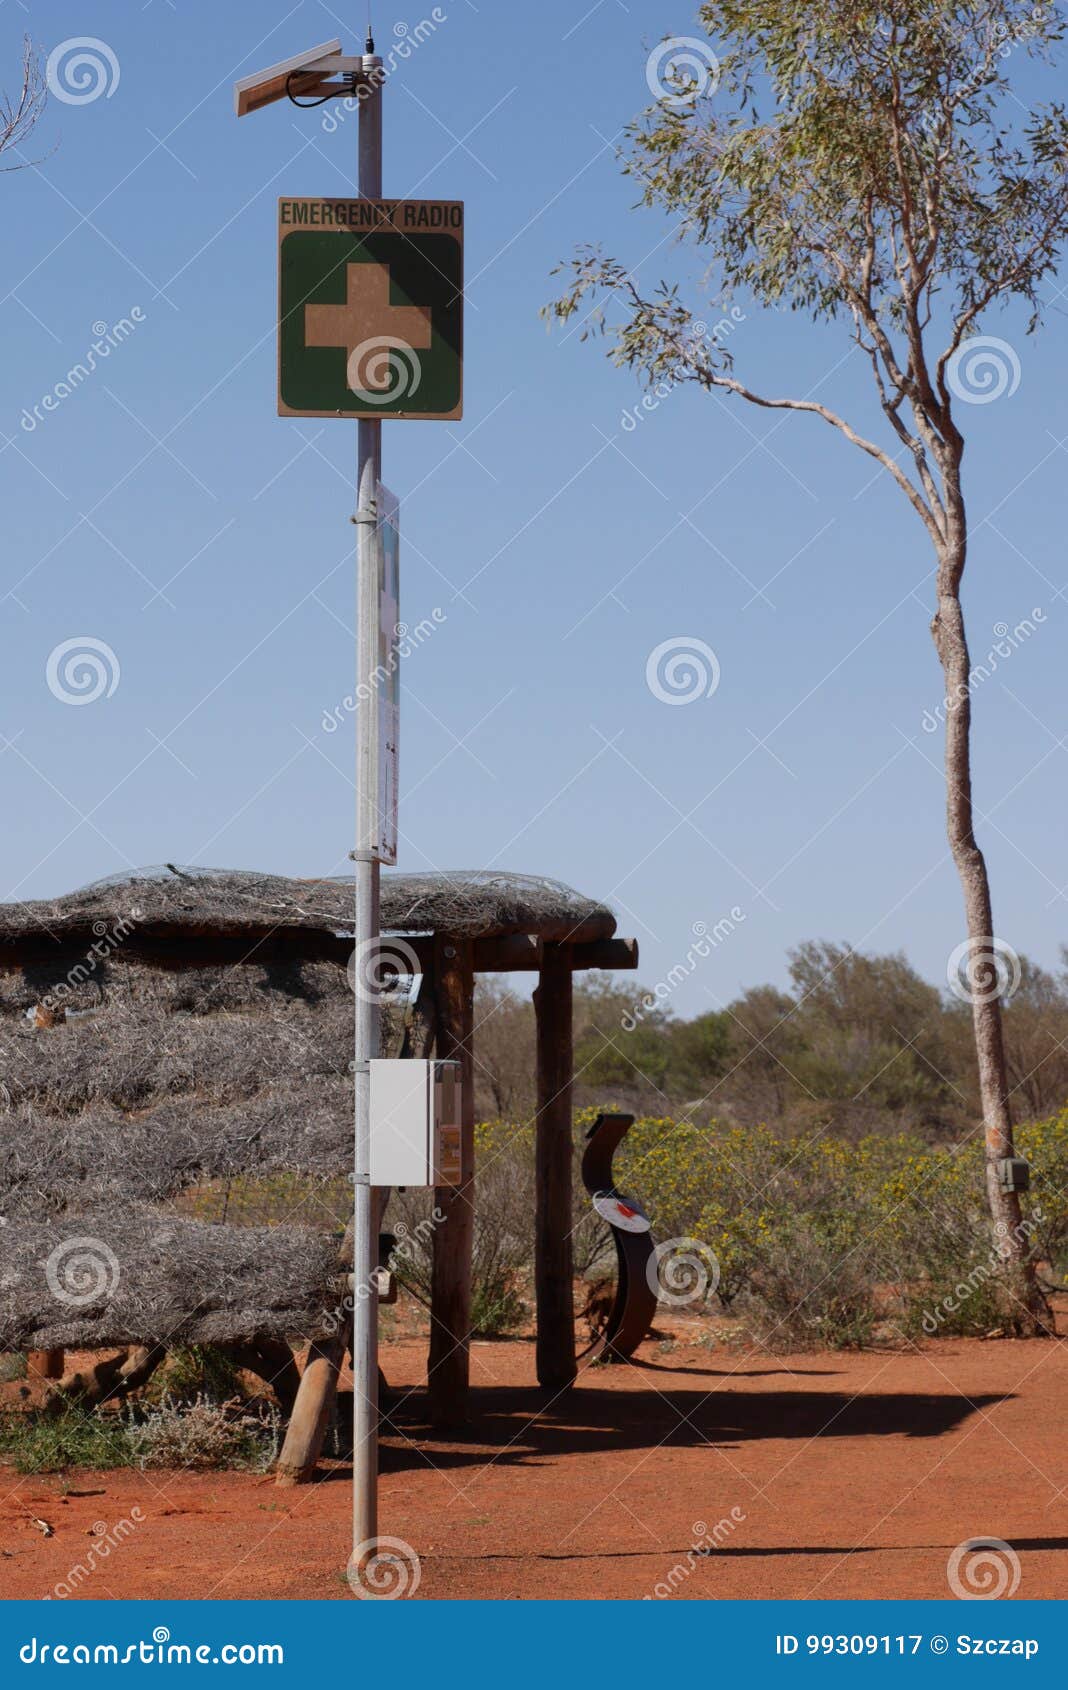 Emergency radio post image. australia - 99309117